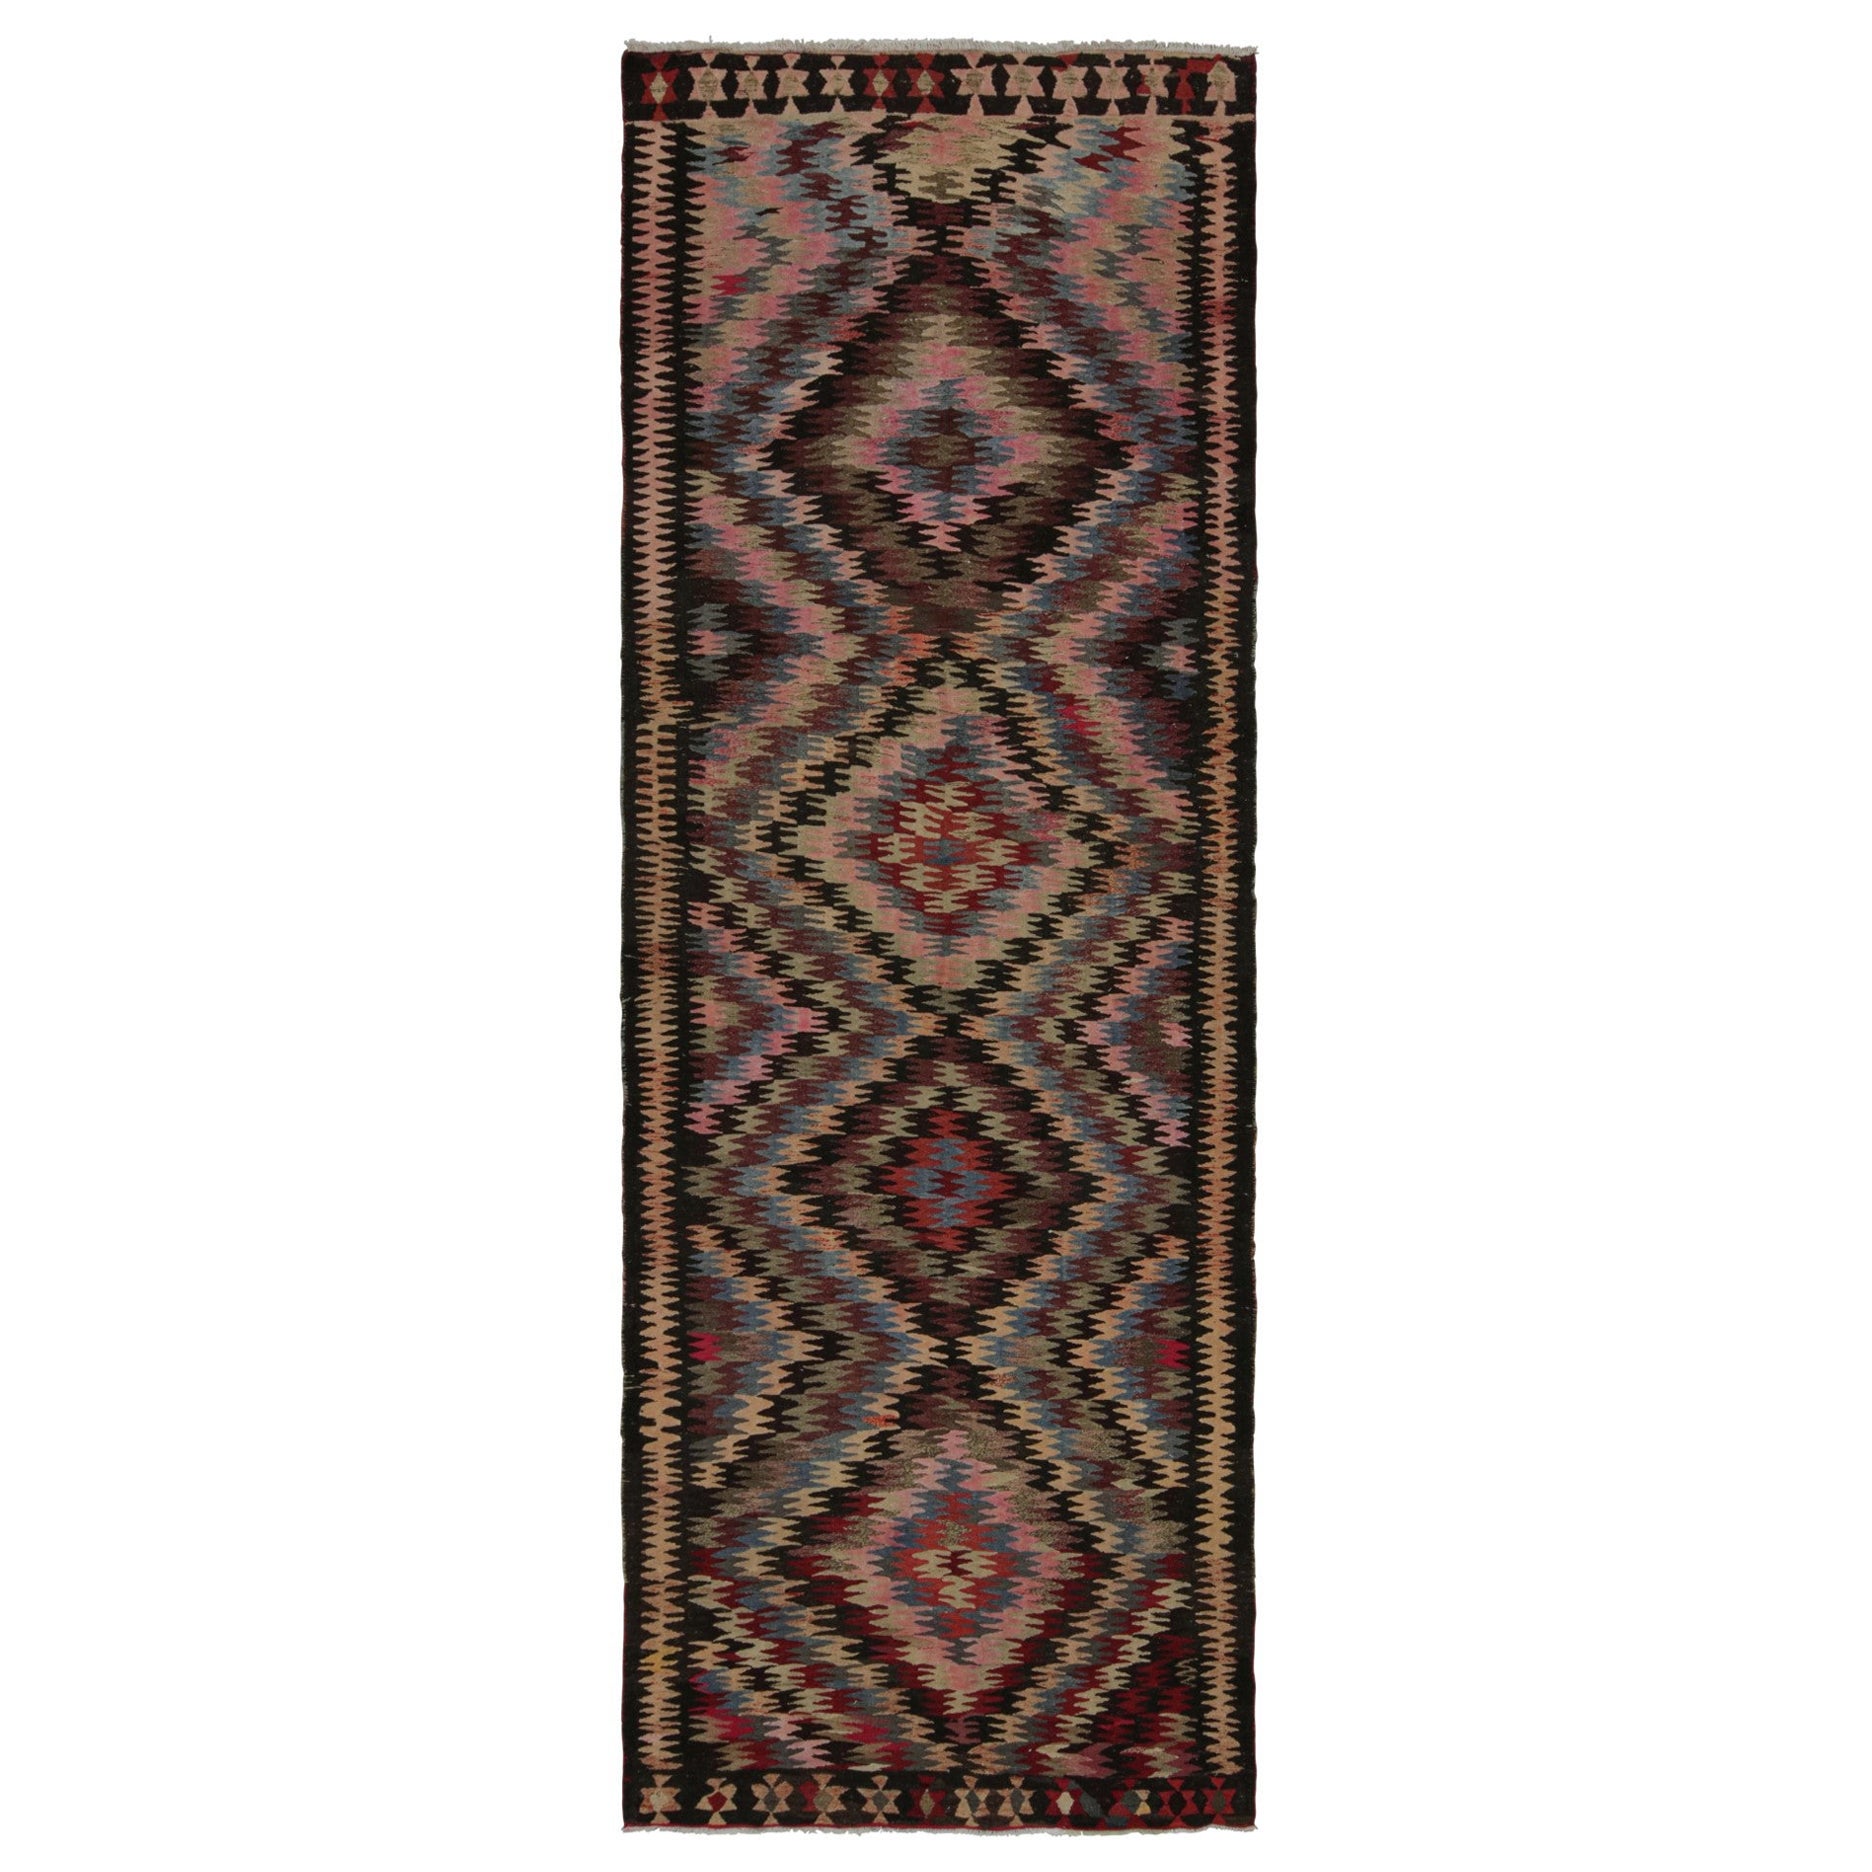 Vintage Afghani Tribal Kilim Polychromatic Geometric Patterns, from Rug & Kilim For Sale